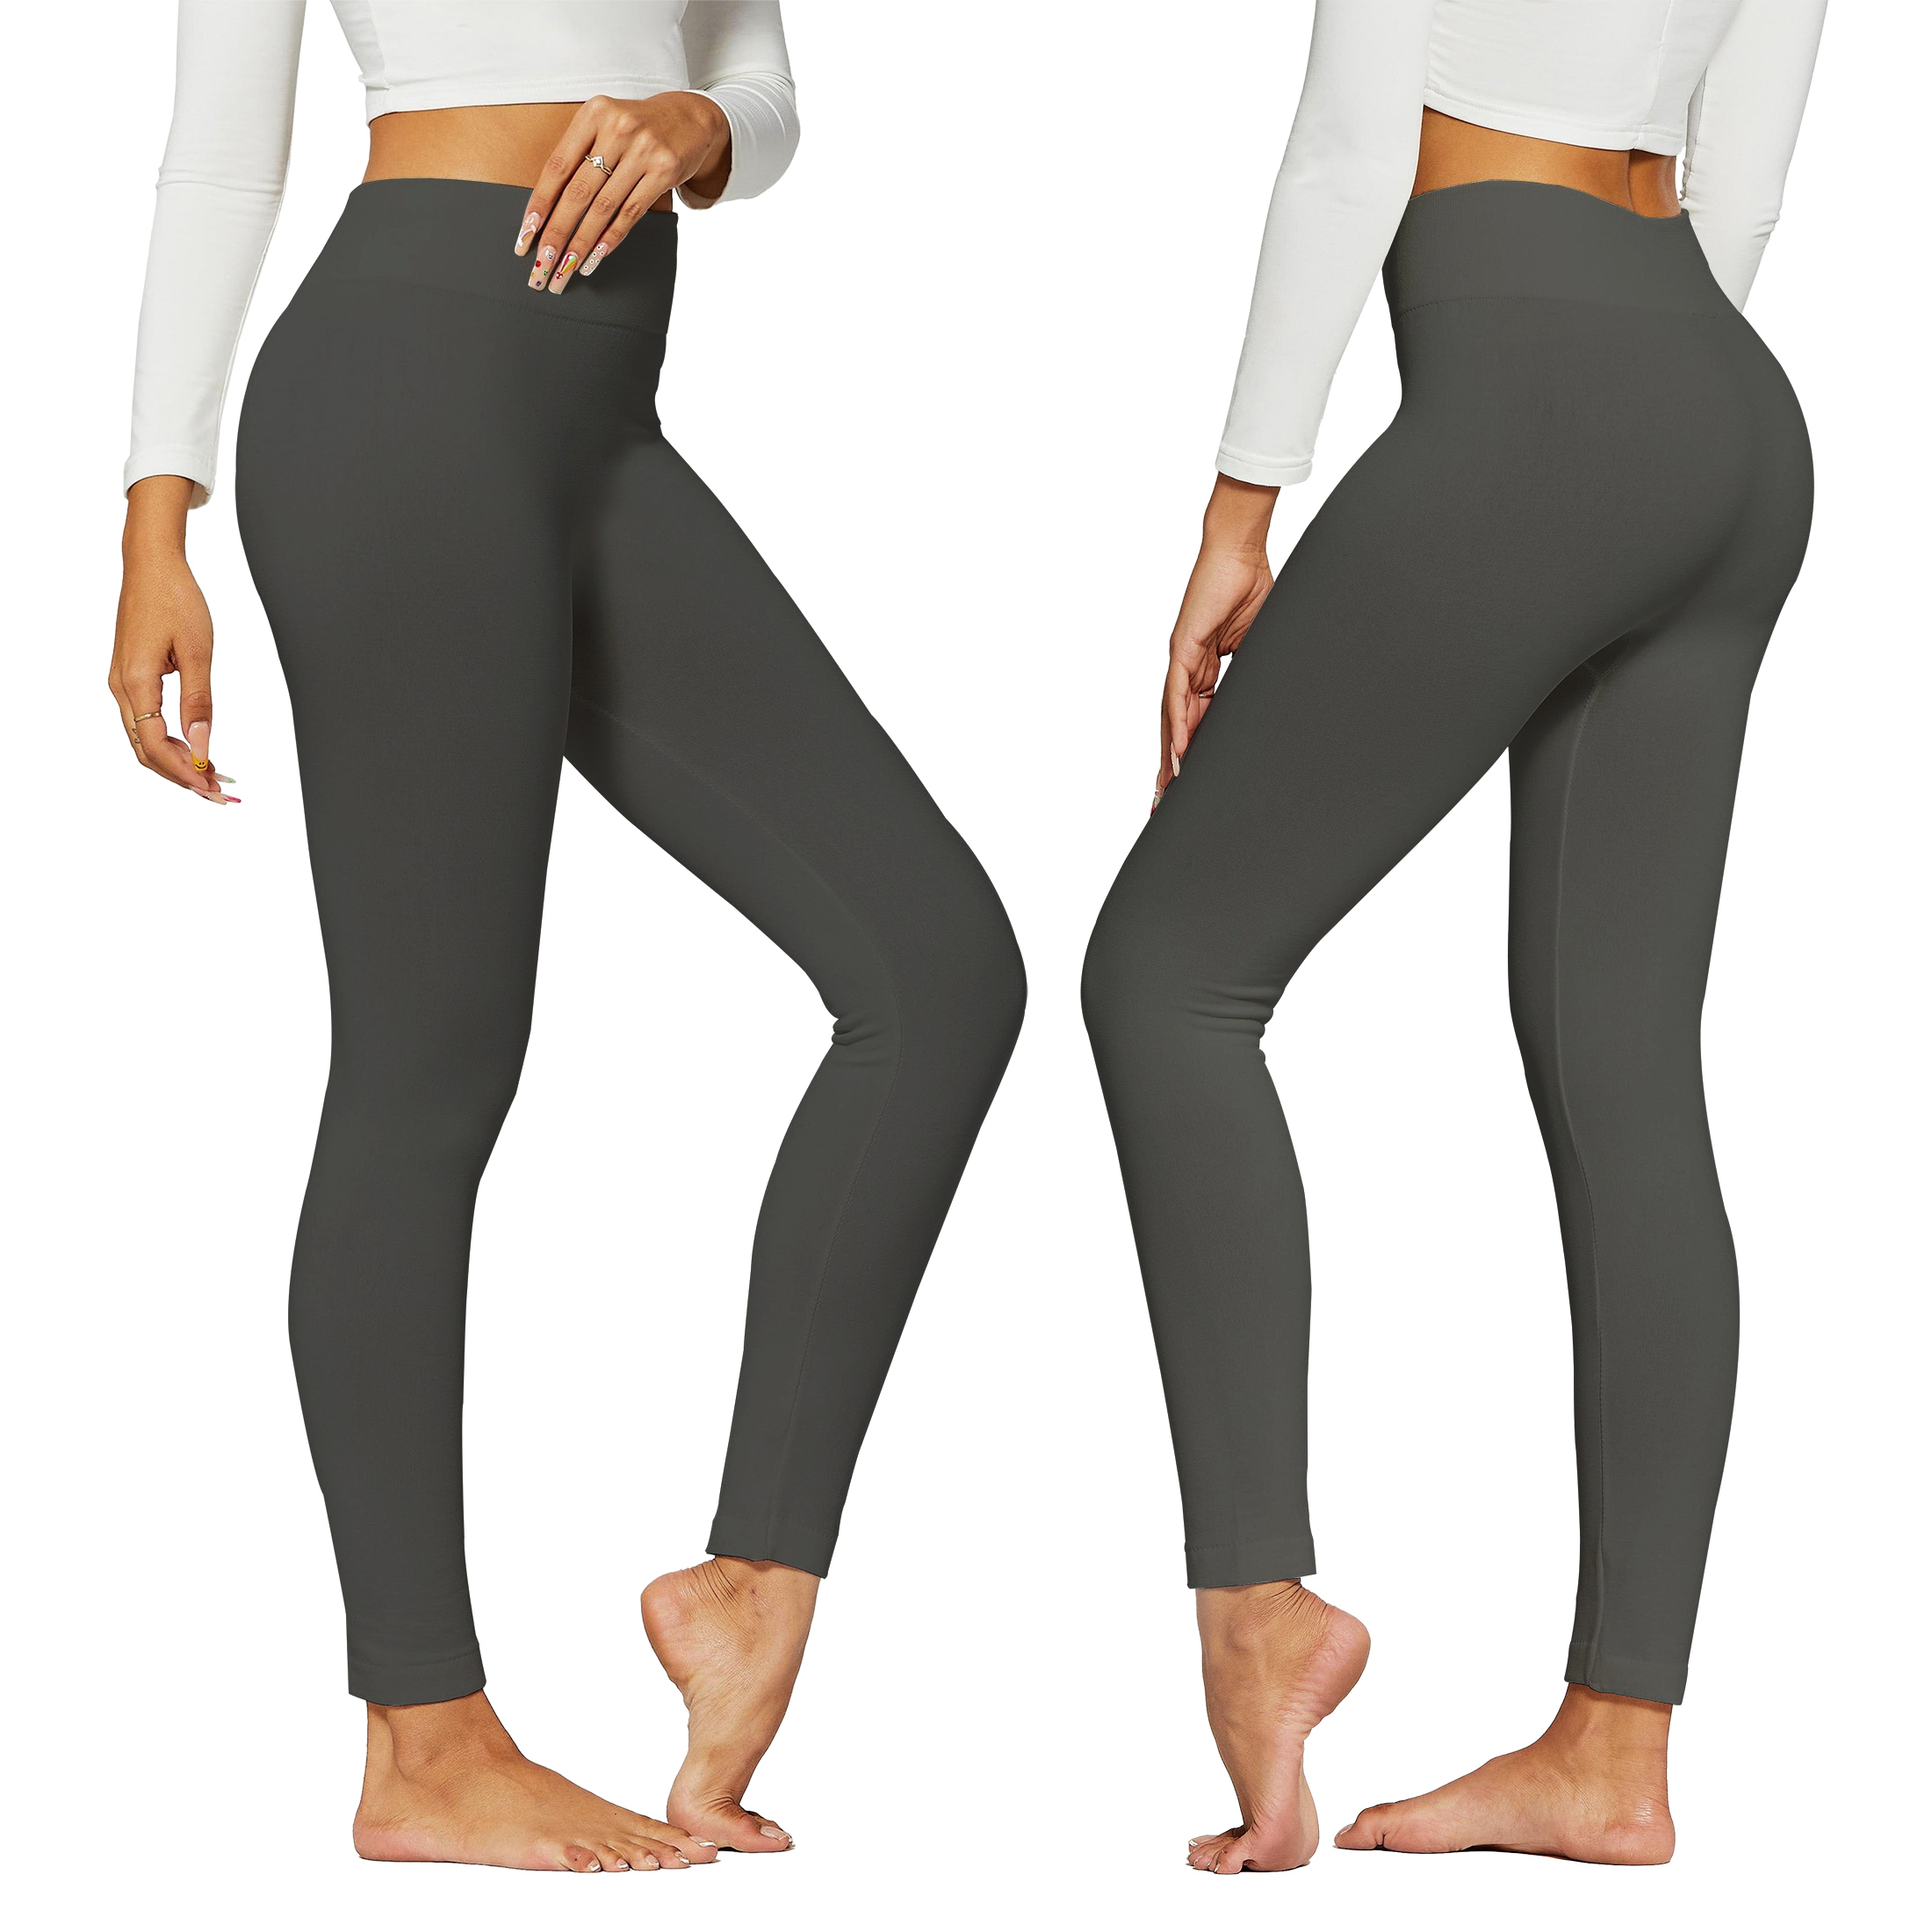 Women's Premium Quality High-Waist Fleece Lined Leggings (S-4X) - Grey, Small/Medium